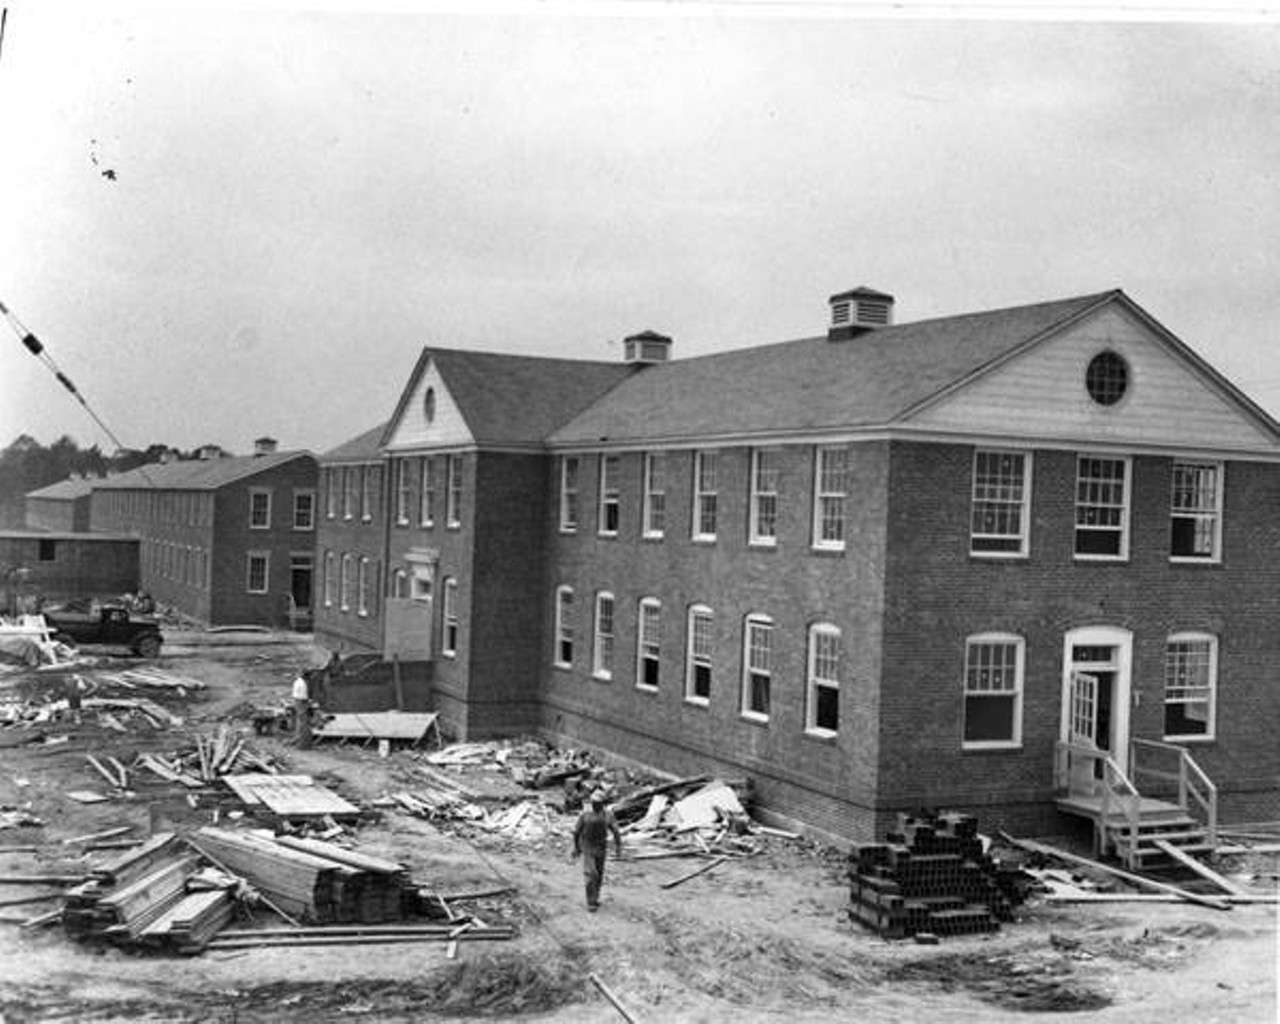  Administration Building and Nurse's Quarters, Crile General Hospital, 1943 